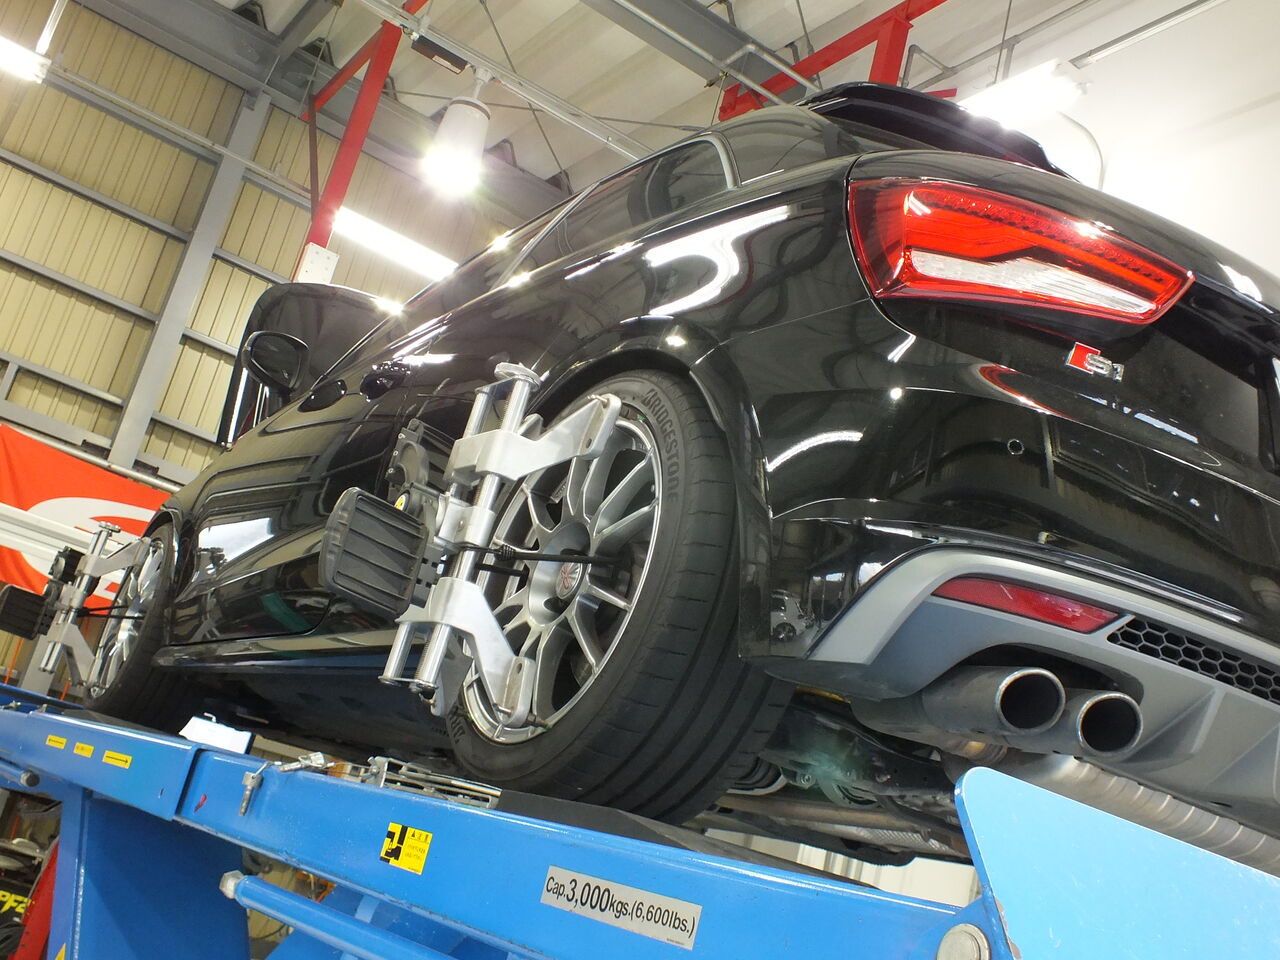 Audi S1 Kw Ver 3 車高調整 4輪アライメント調整 イシカワエンジニアリング スタッフブログ